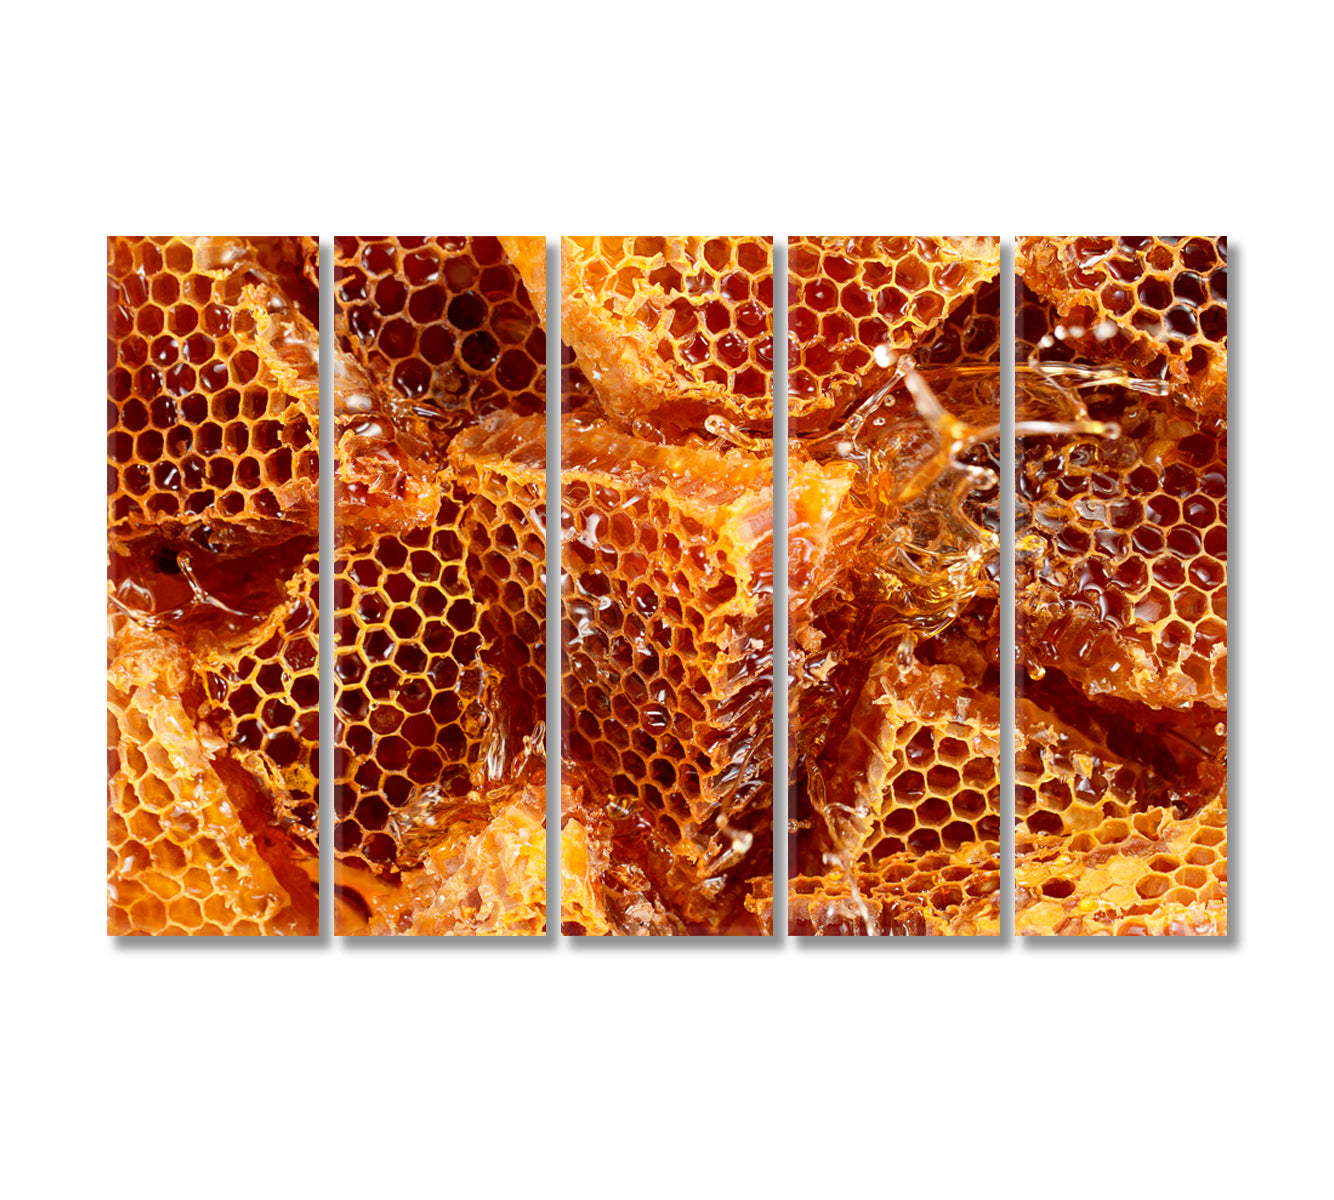 Honeycombs with Honey Canvas Print-Canvas Print-CetArt-5 Panels-36x24 inches-CetArt